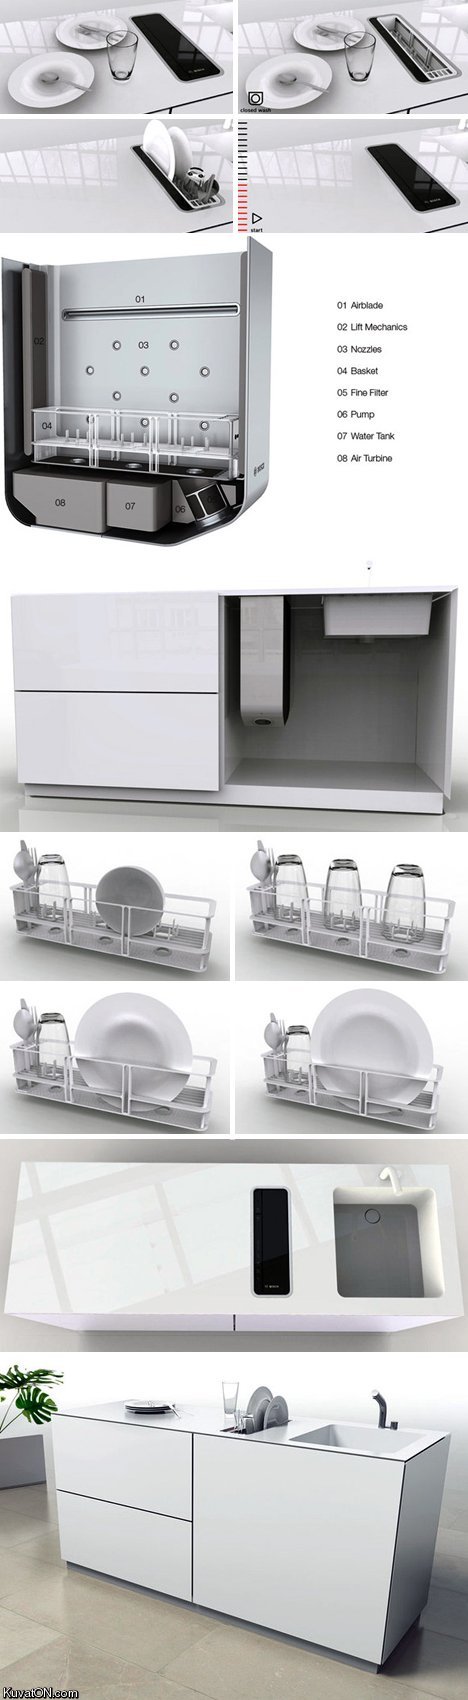 countertop_mini_dishwasher.jpg